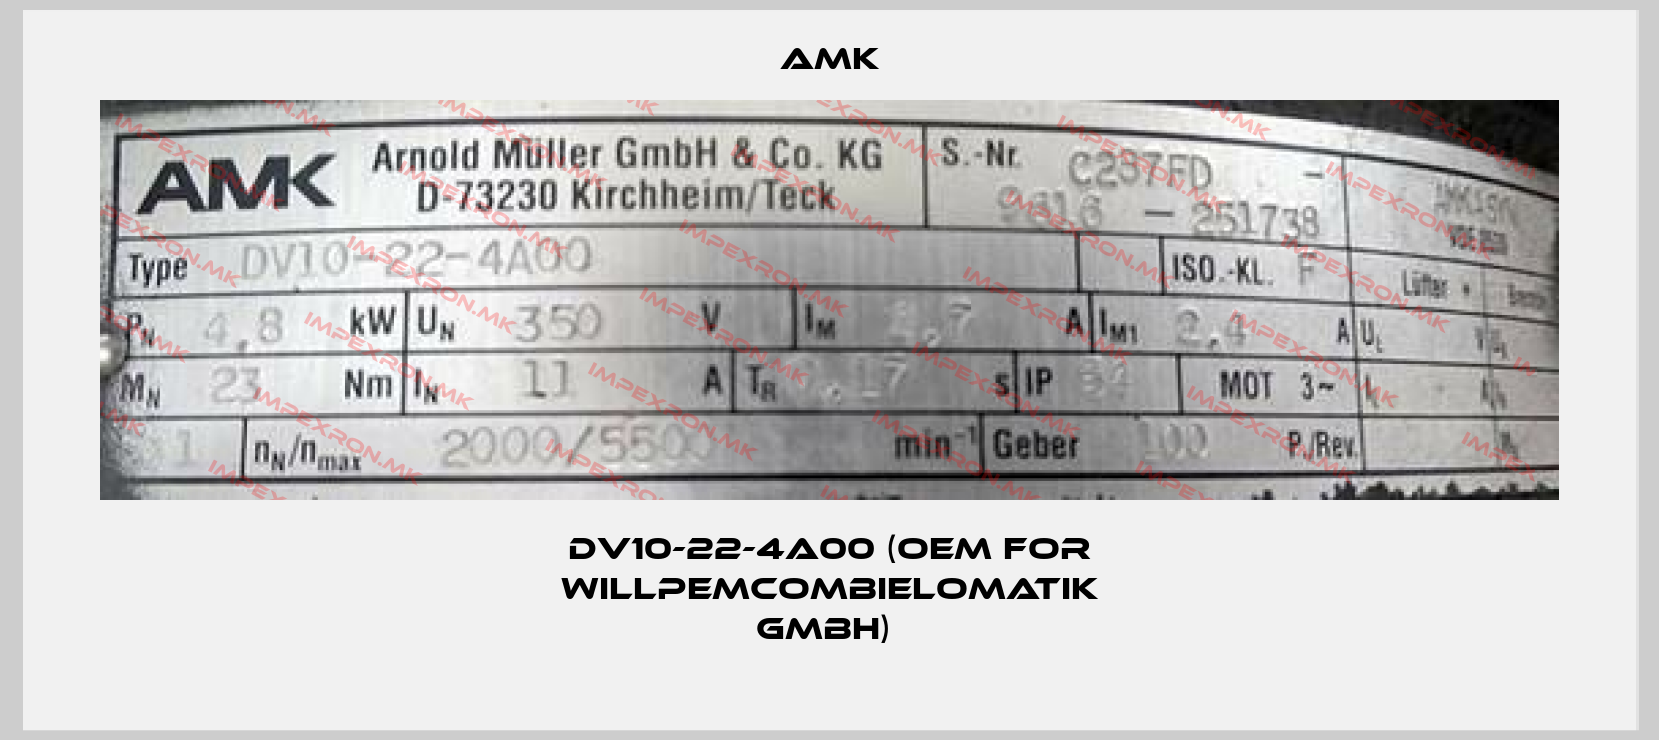 AMK-DV10-22-4A00 (OEM for WillPemcomBielomatik GmbH) price